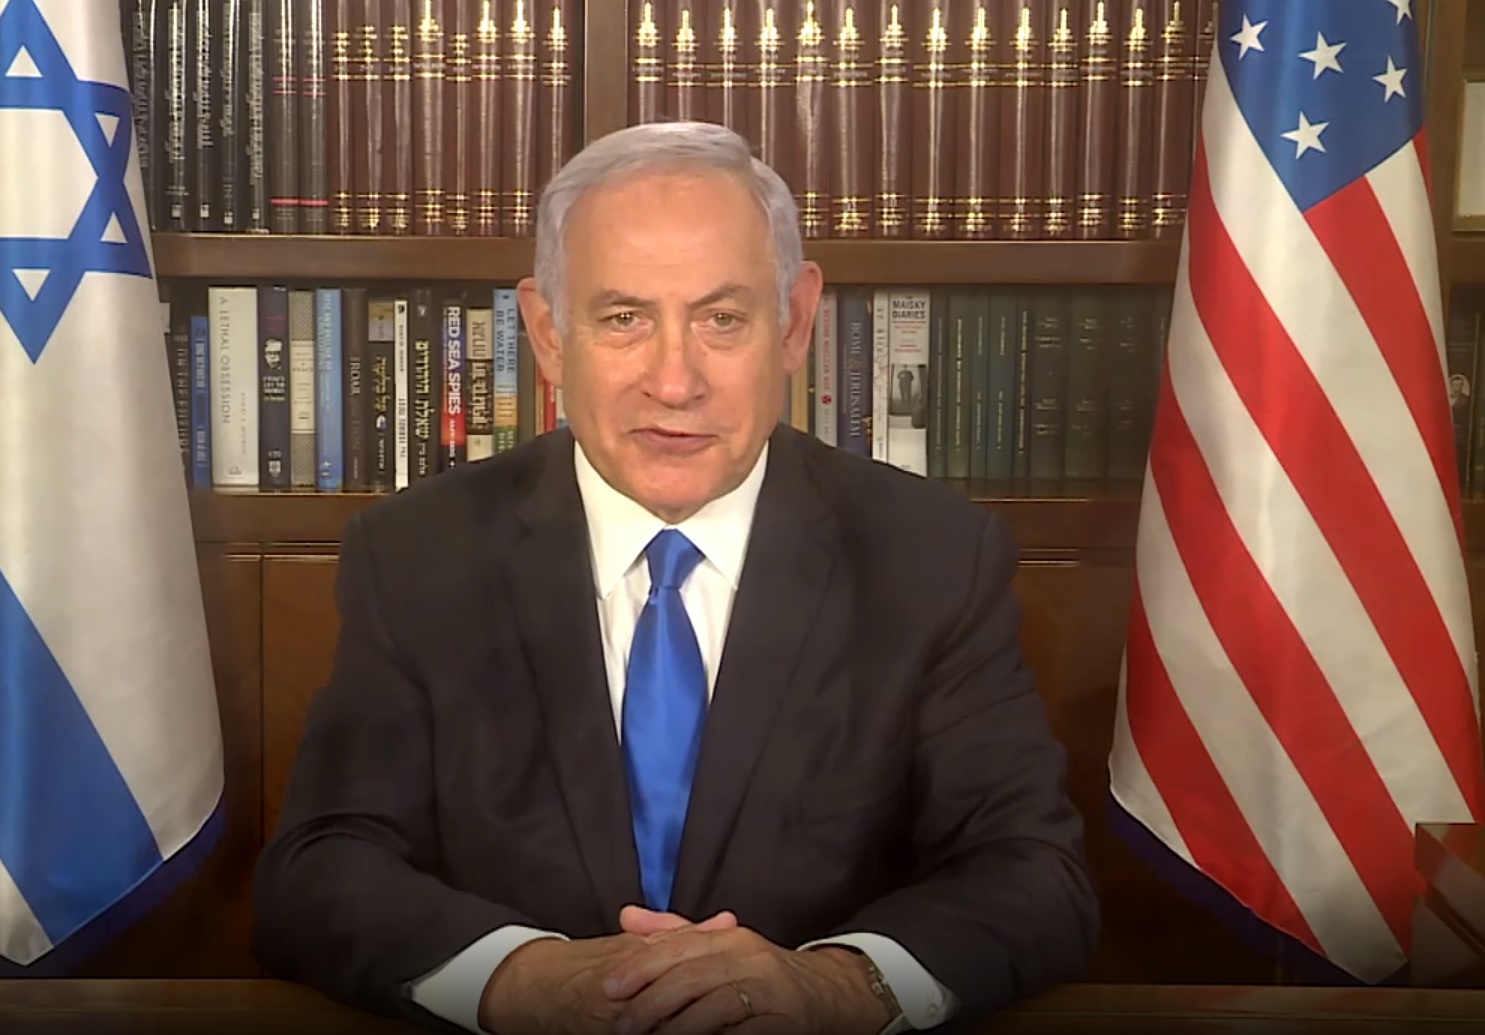 Congratulating Biden, Netanyahu urges him to build on peace deals